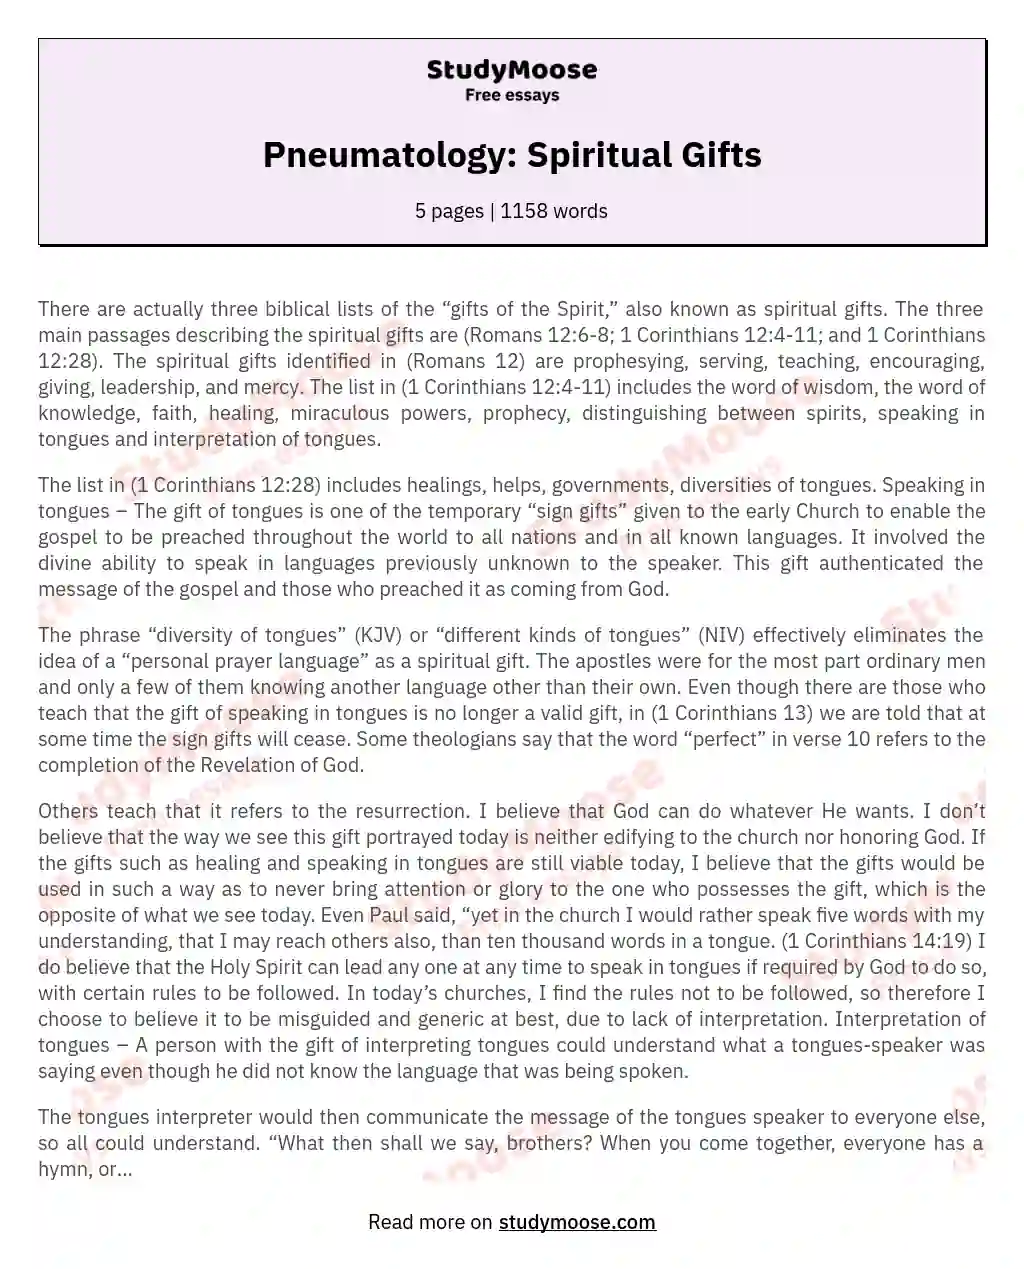 Pneumatology: Spiritual Gifts essay